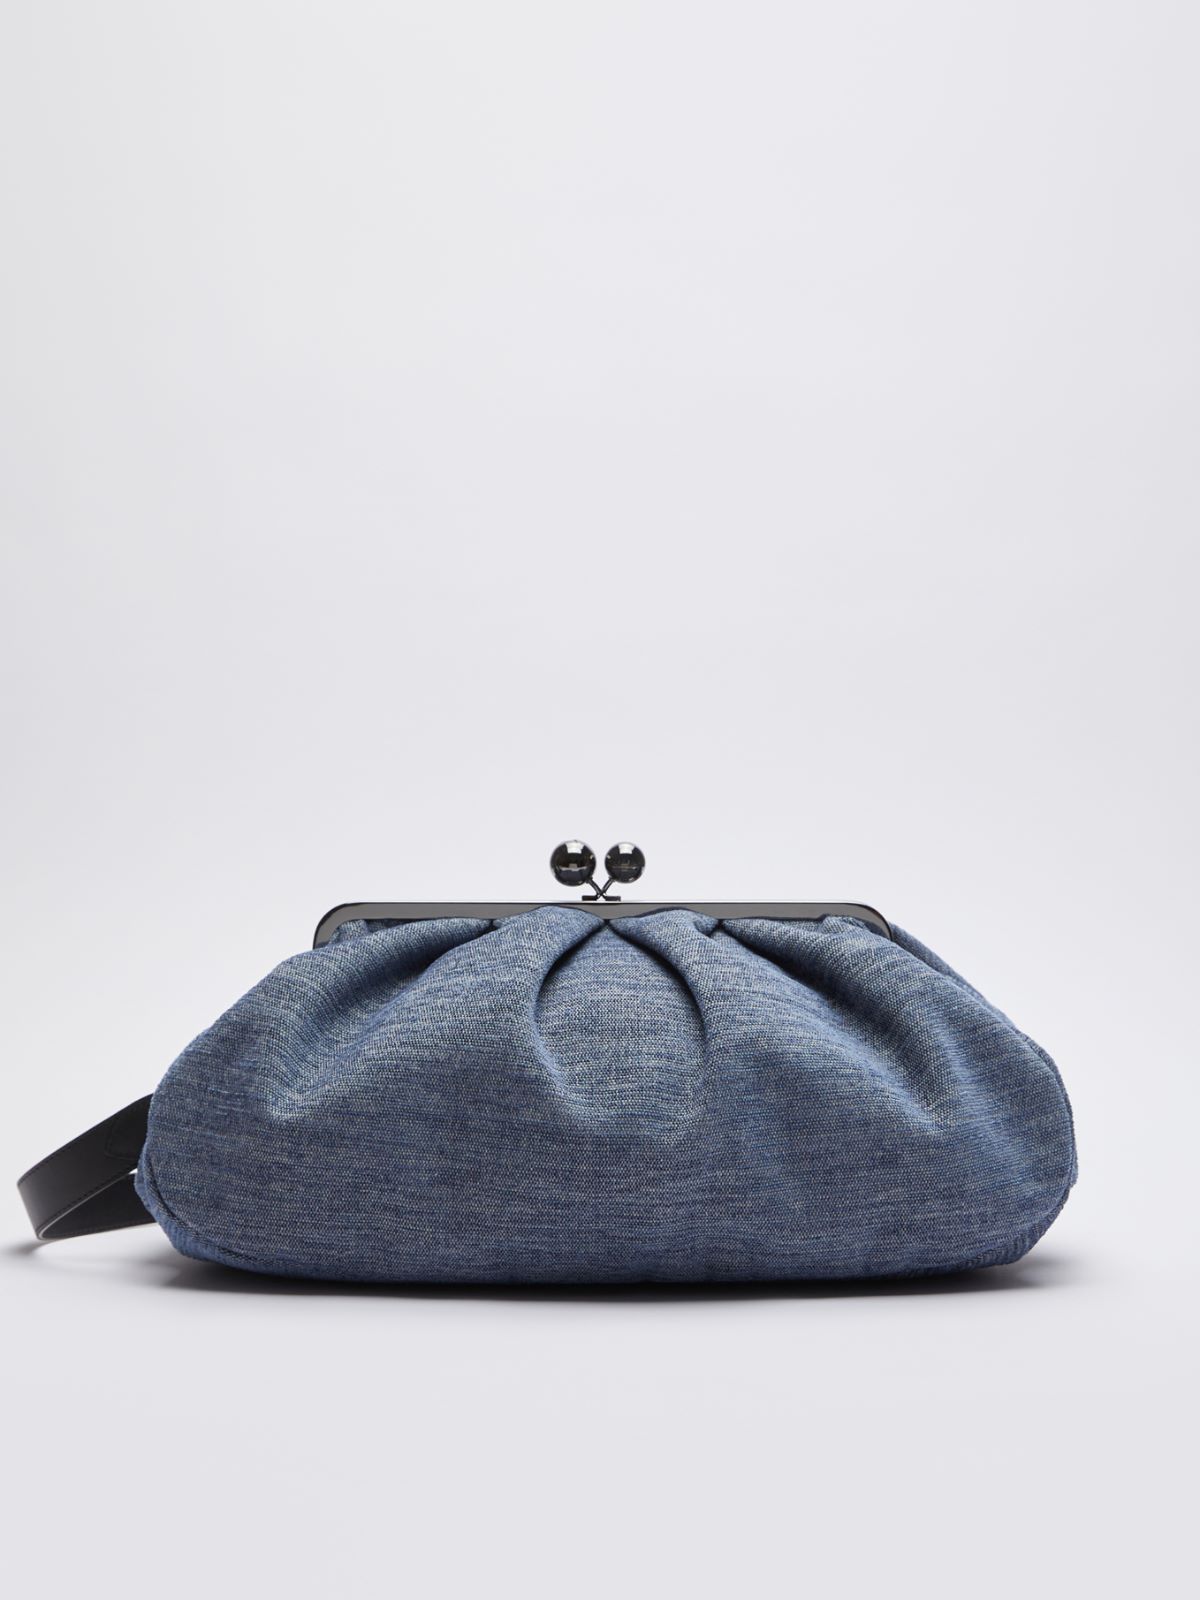 Pasticcino Bag Large in cotone jacquard - AVIO - Weekend Max Mara